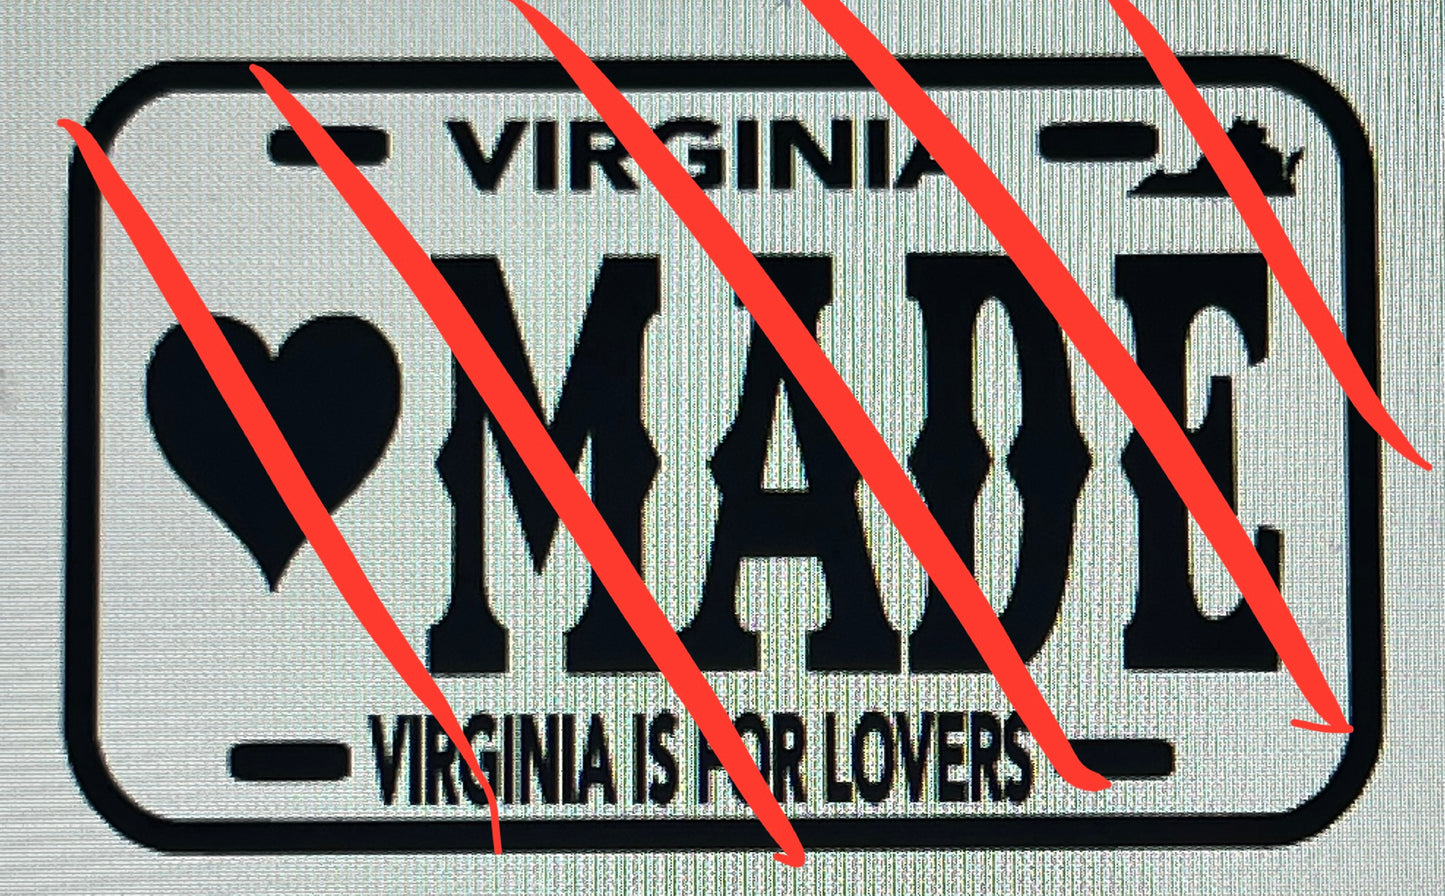 {Virginia license plate insert} Silicone Mold